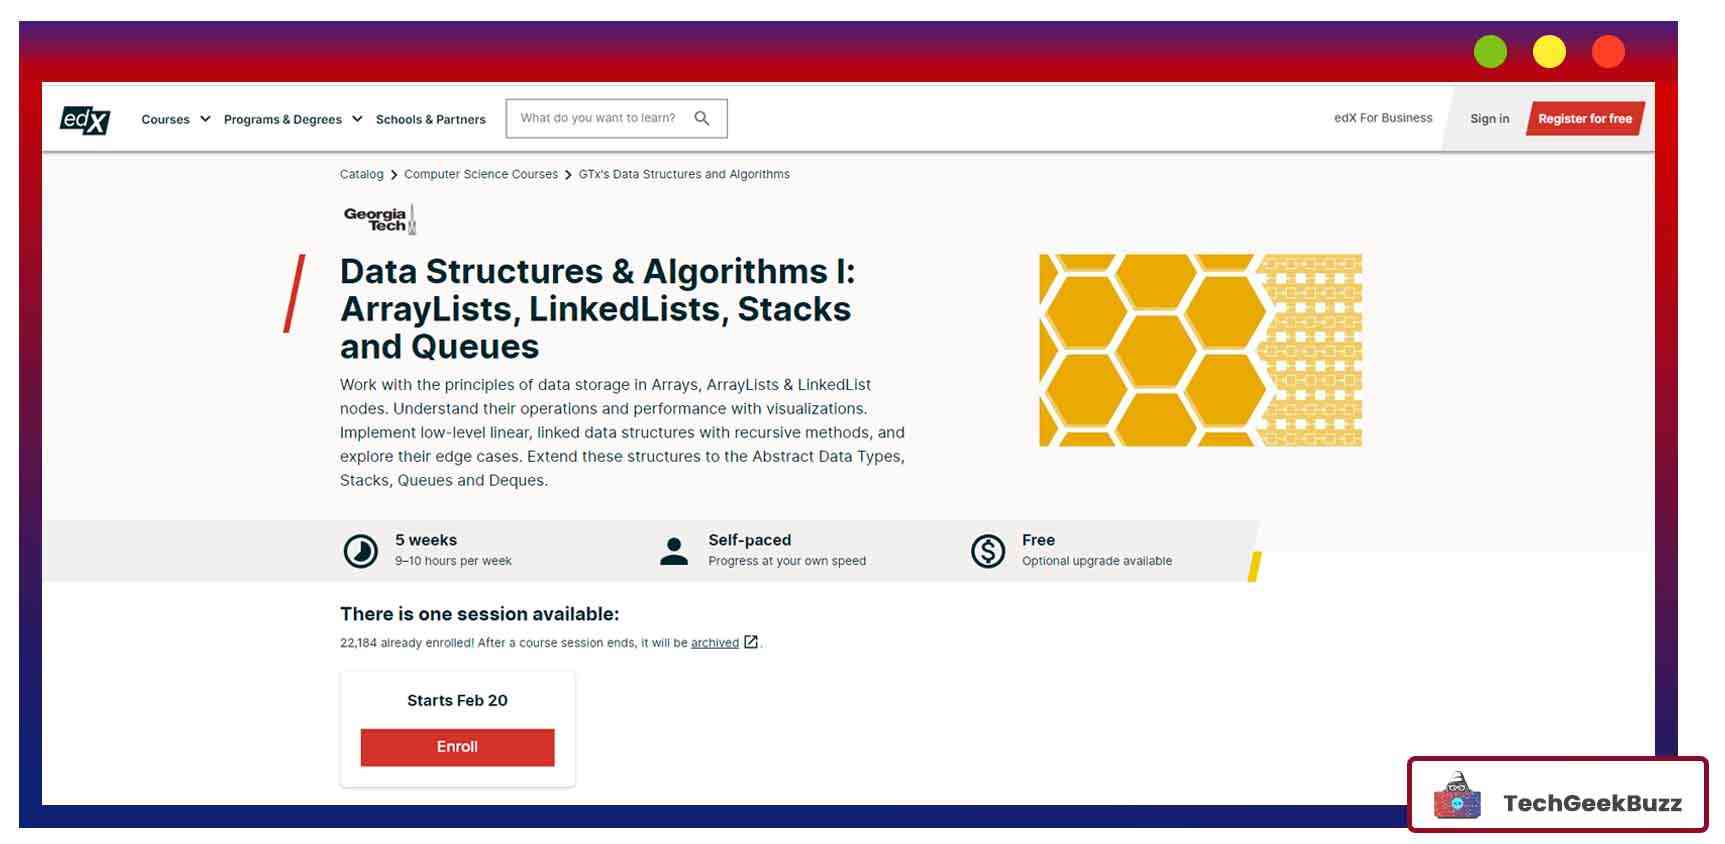 Data Structures & Algorithms I: ArrayLists, LinkedLists, Stacks, and Queues